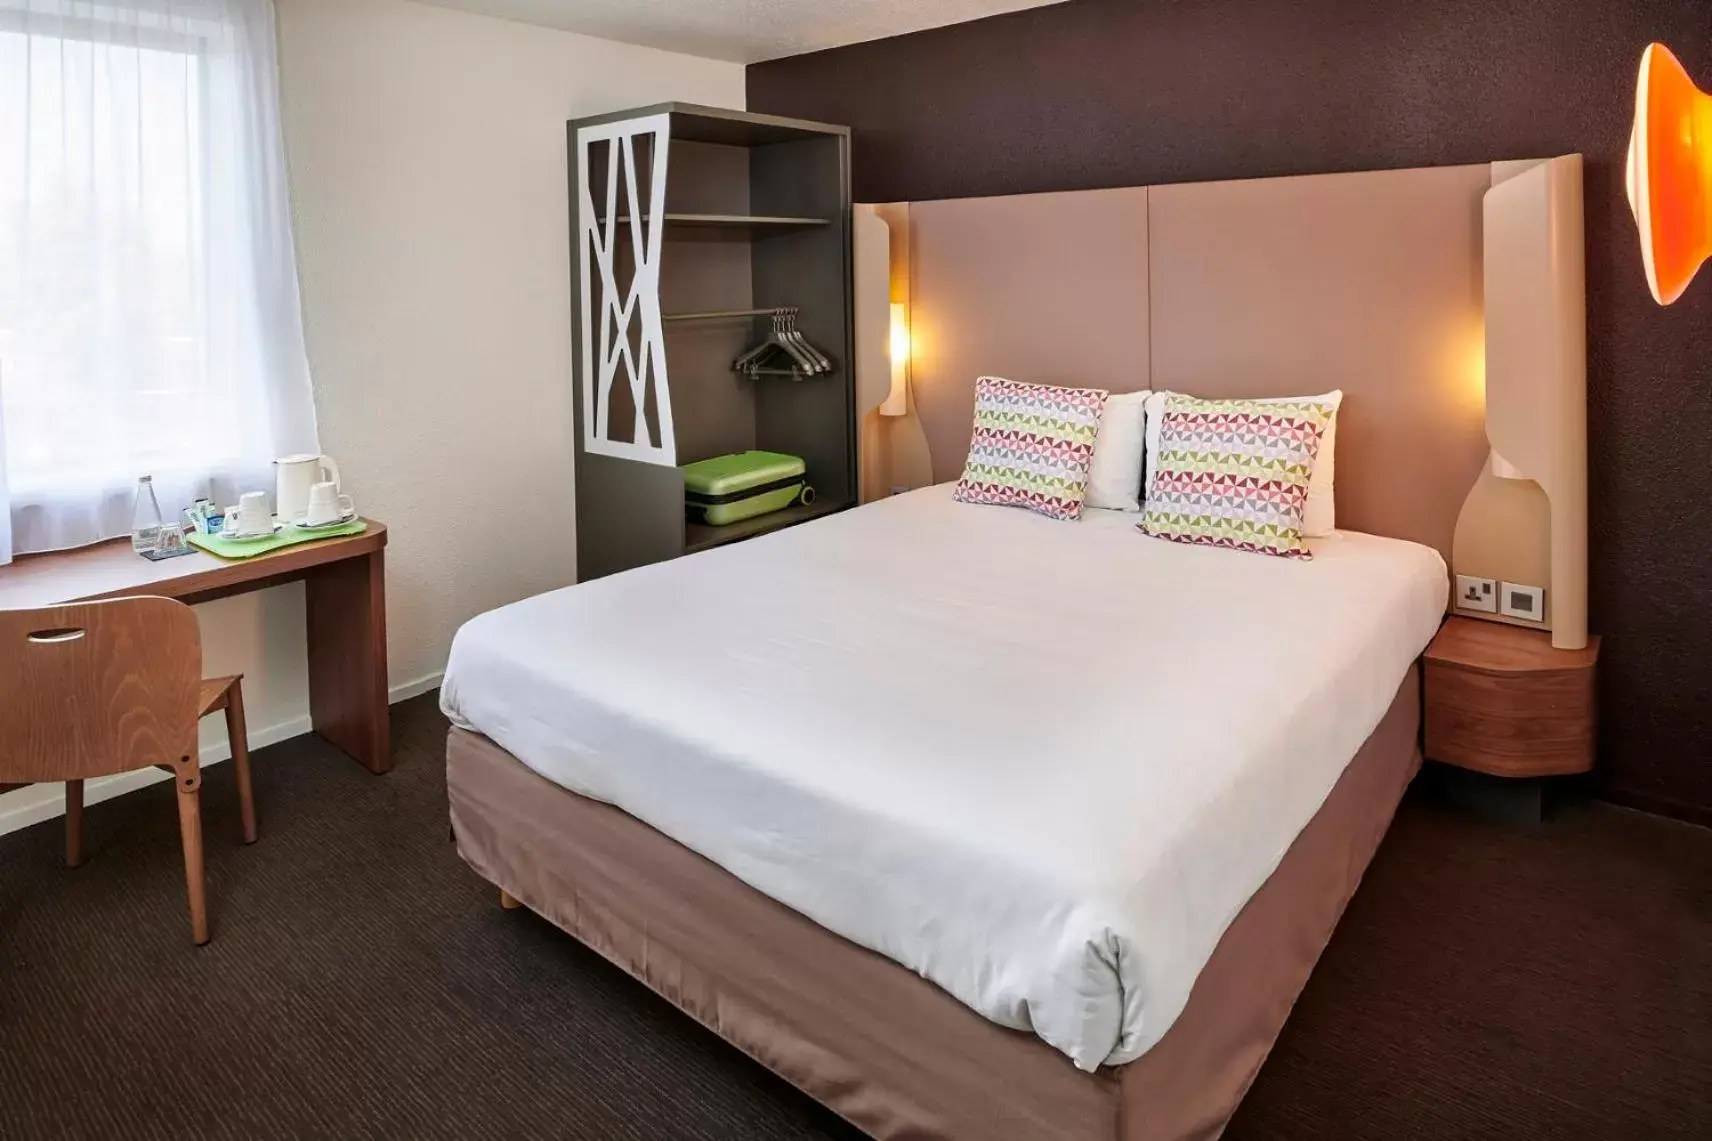 Bed in Campanile Hotel - Birmingham